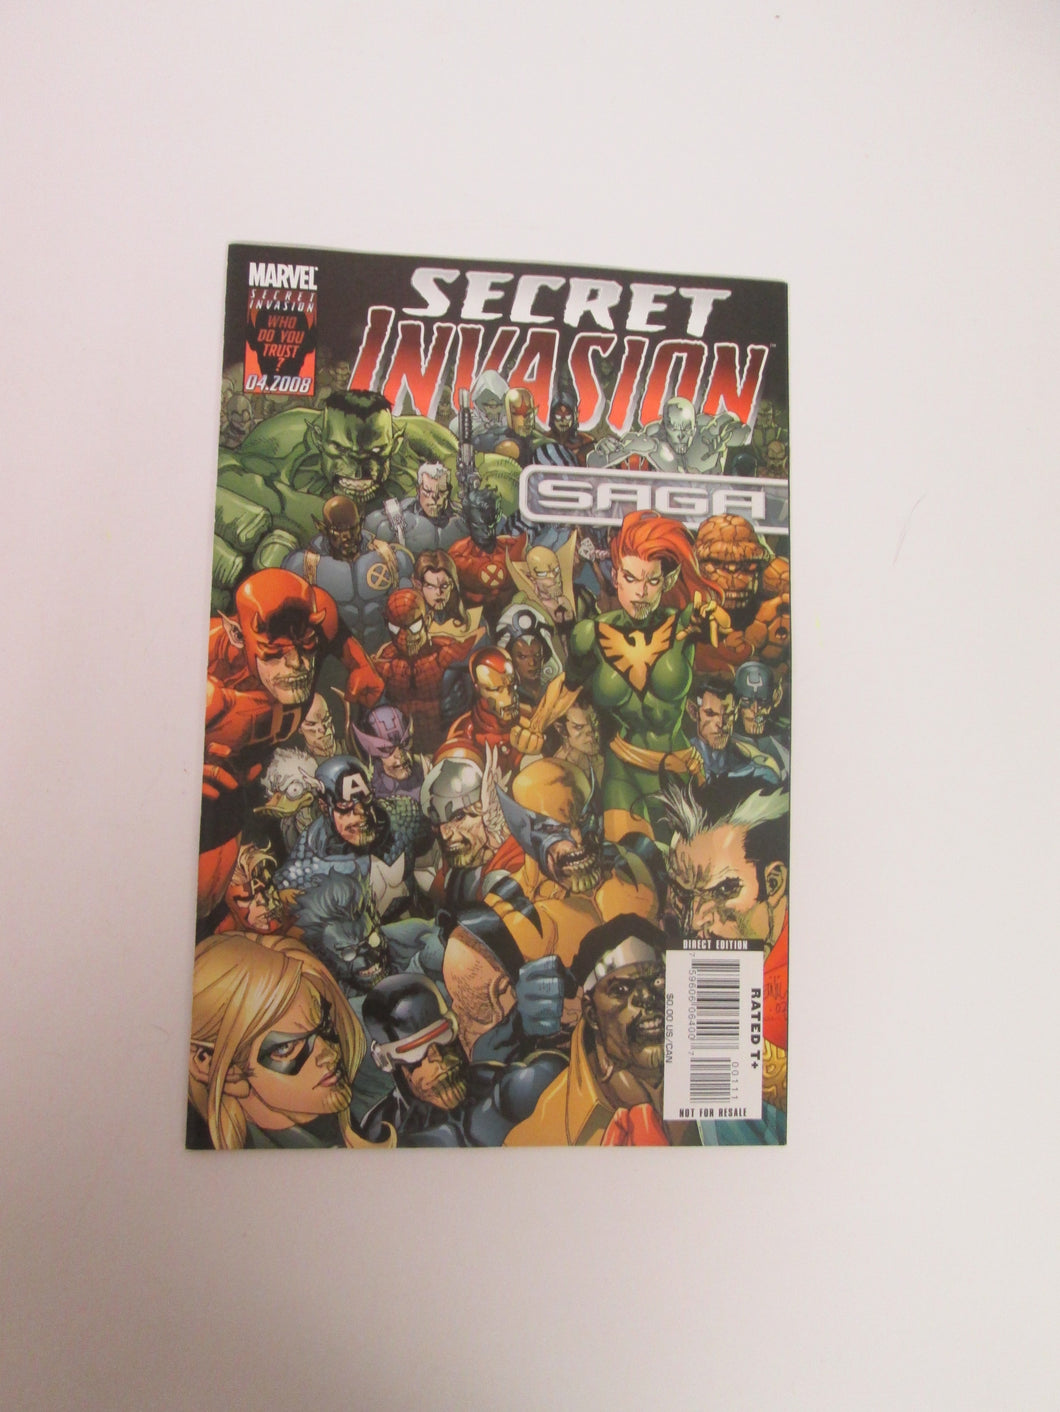 Secret Invasion Saga (Marvel)